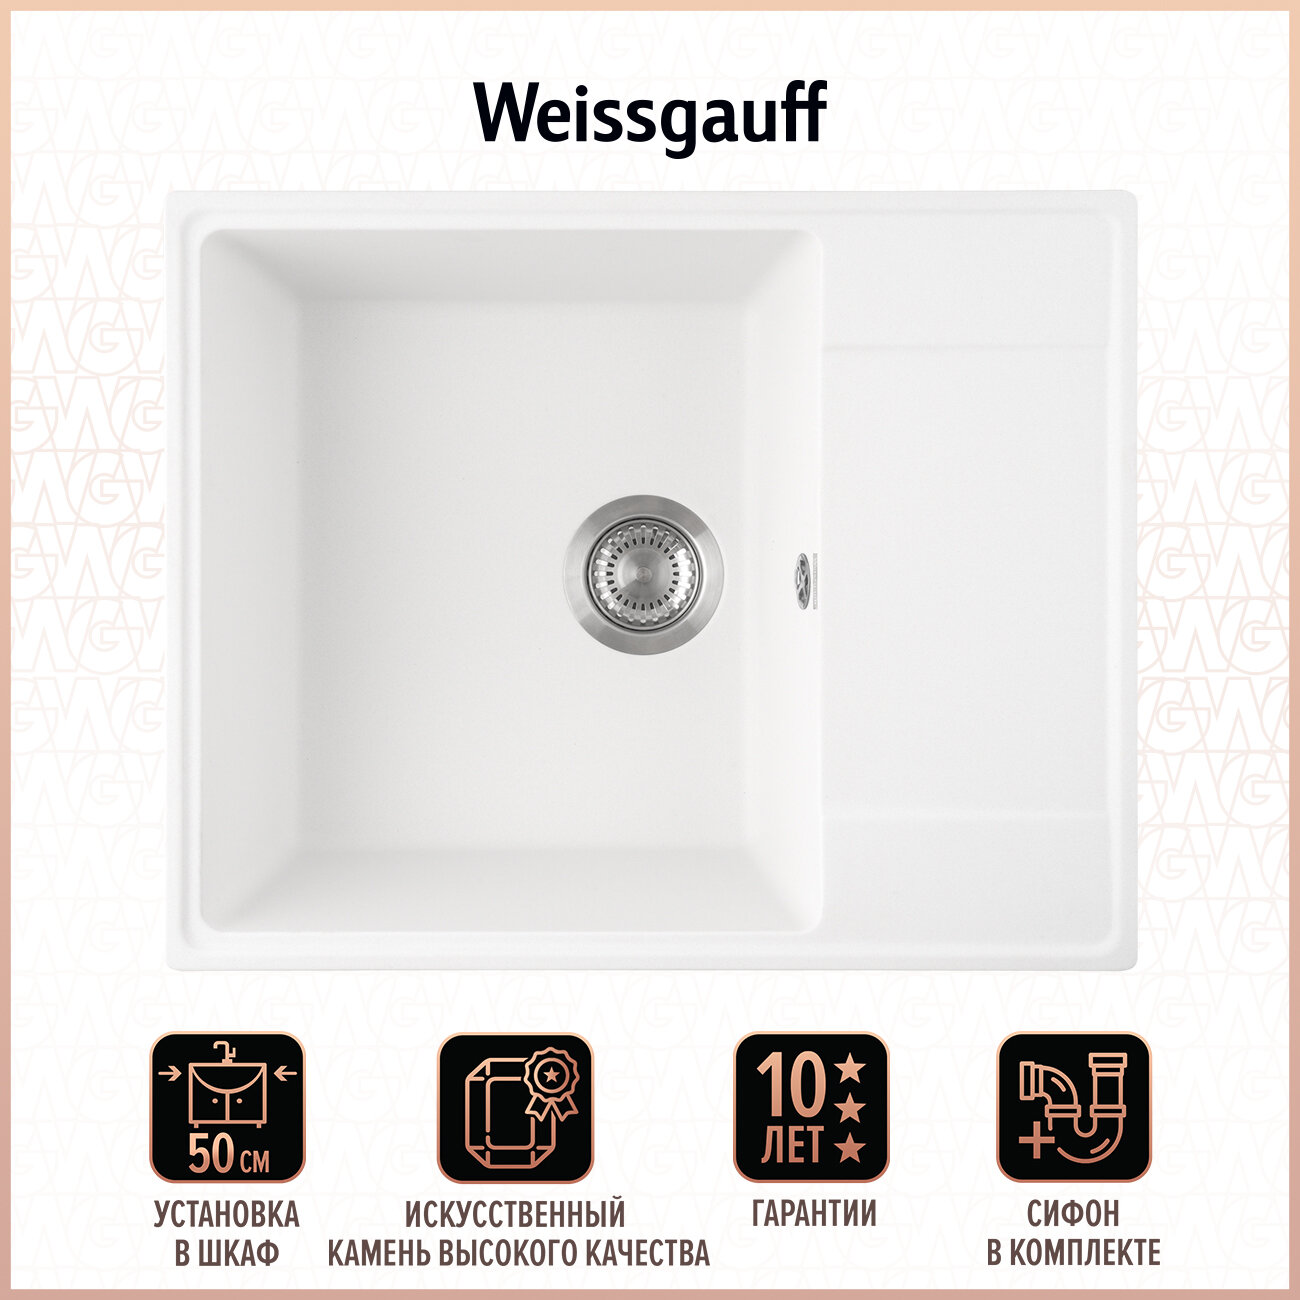 Кухонная мойка Weissgauff WG 65001 White